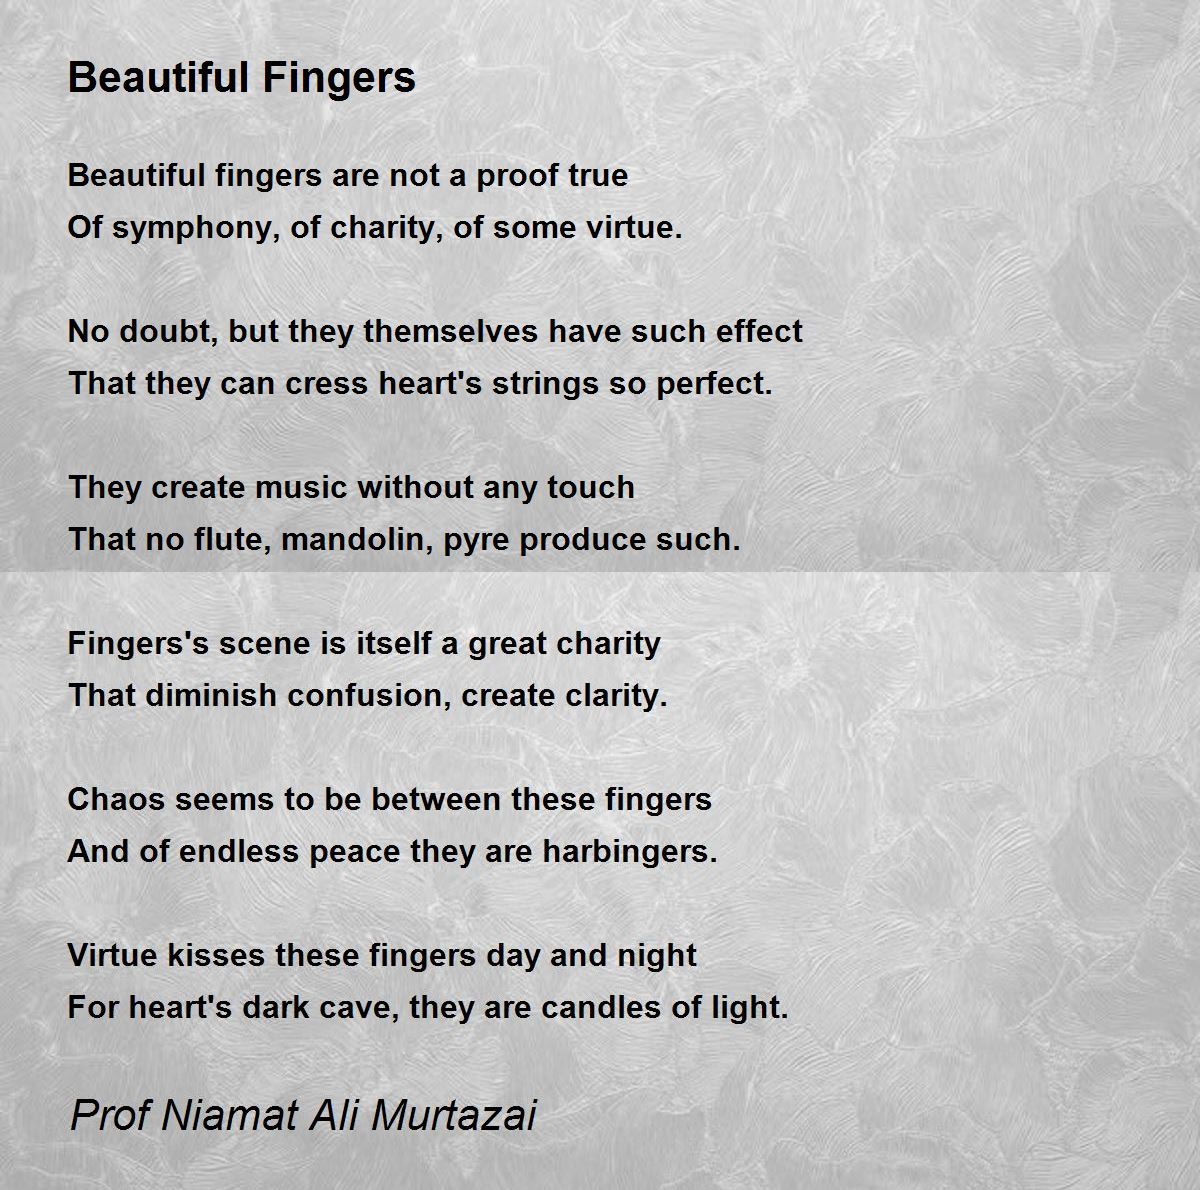 Philosophy - Philosophy Poem by Prof Niamat Ali Murtazai